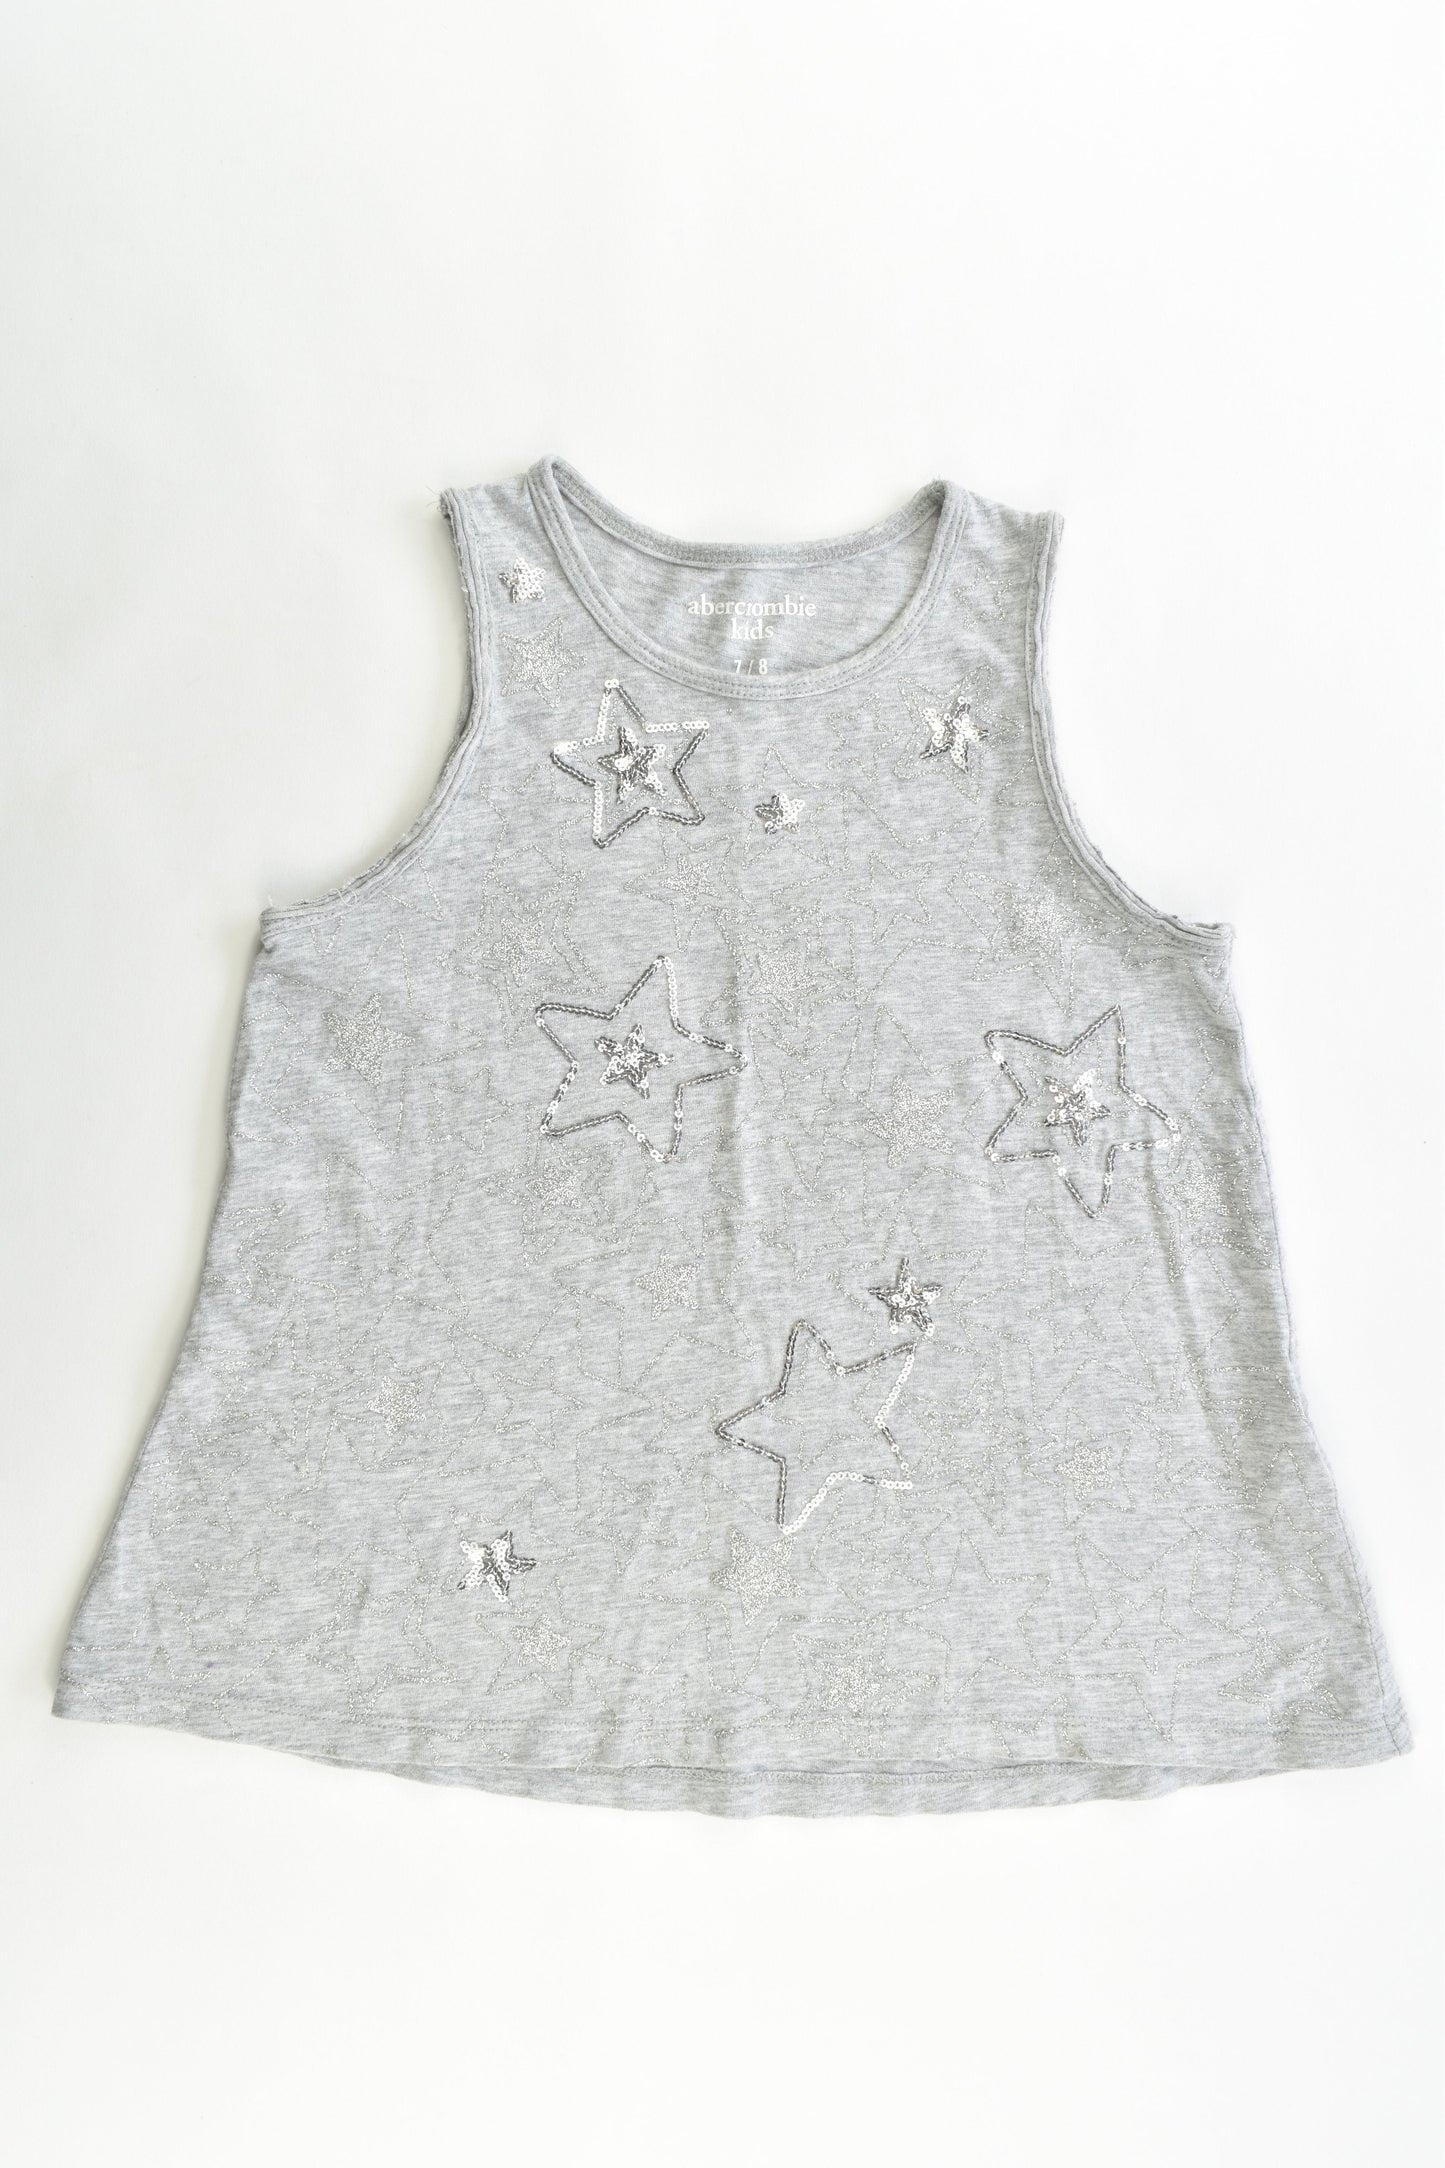 Abercrombie Kids Size 7/8 Stars T-shirt